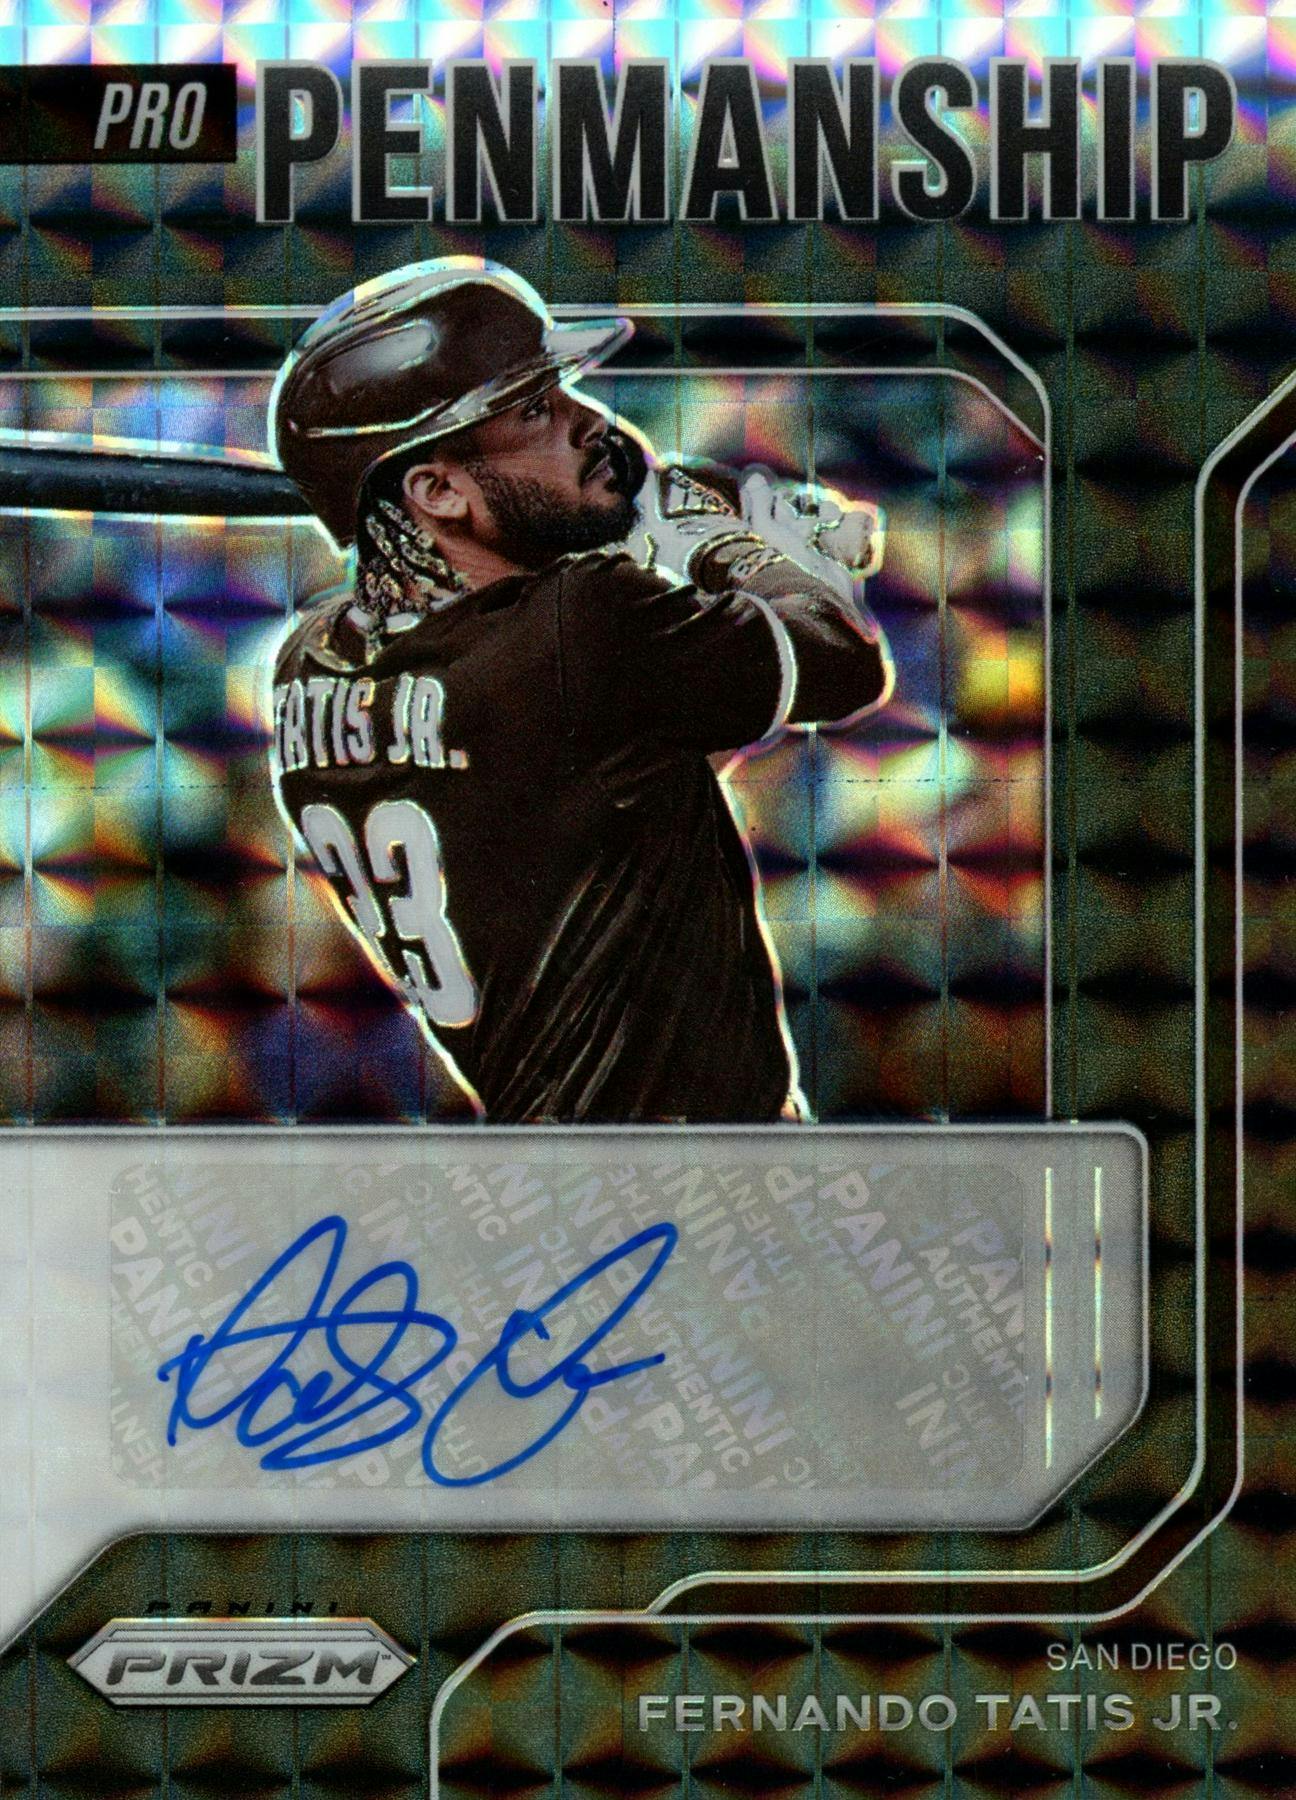 Kyle Tucker 2023 Major League Baseball All-Star Game Autographed